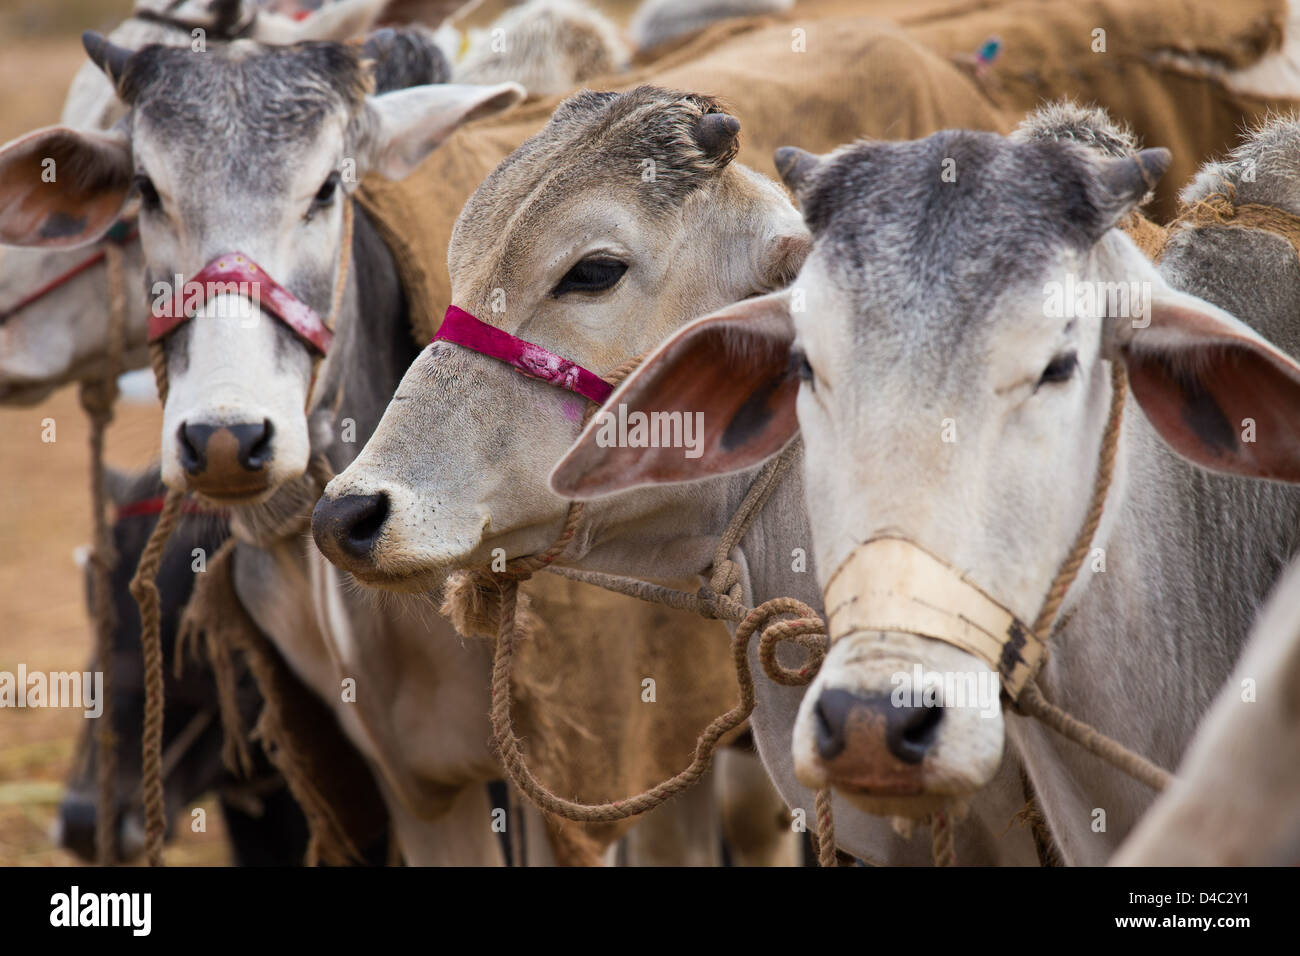 Le bétail Nagaur, équitable, Nagaur Rajasthan, Inde Banque D'Images